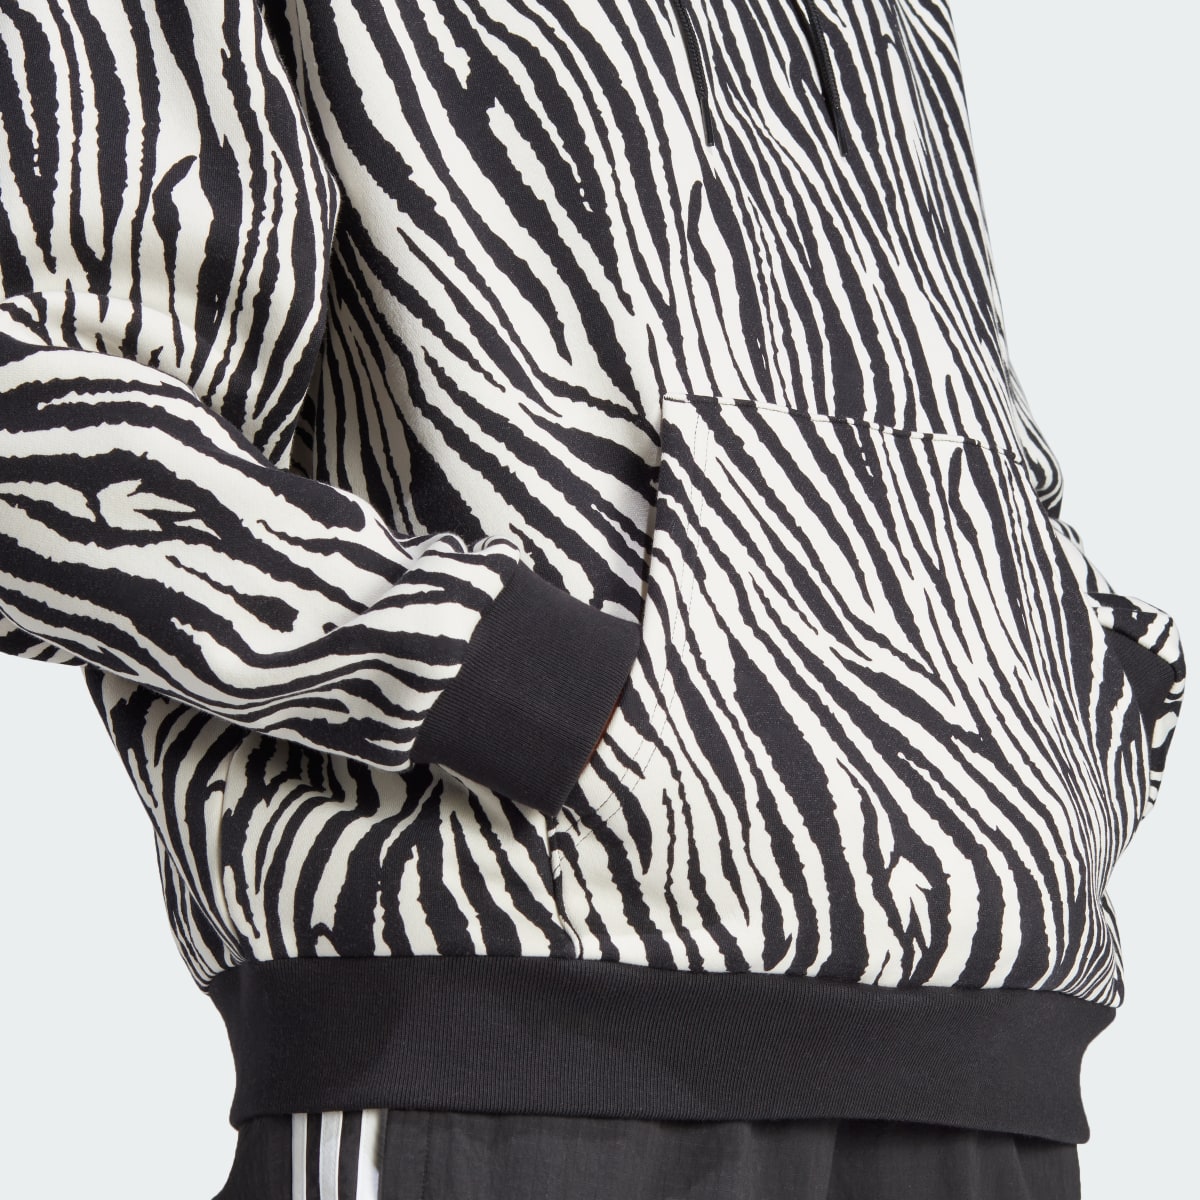 Adidas Allover Zebra Animal Print Essentials Hoodie. 7